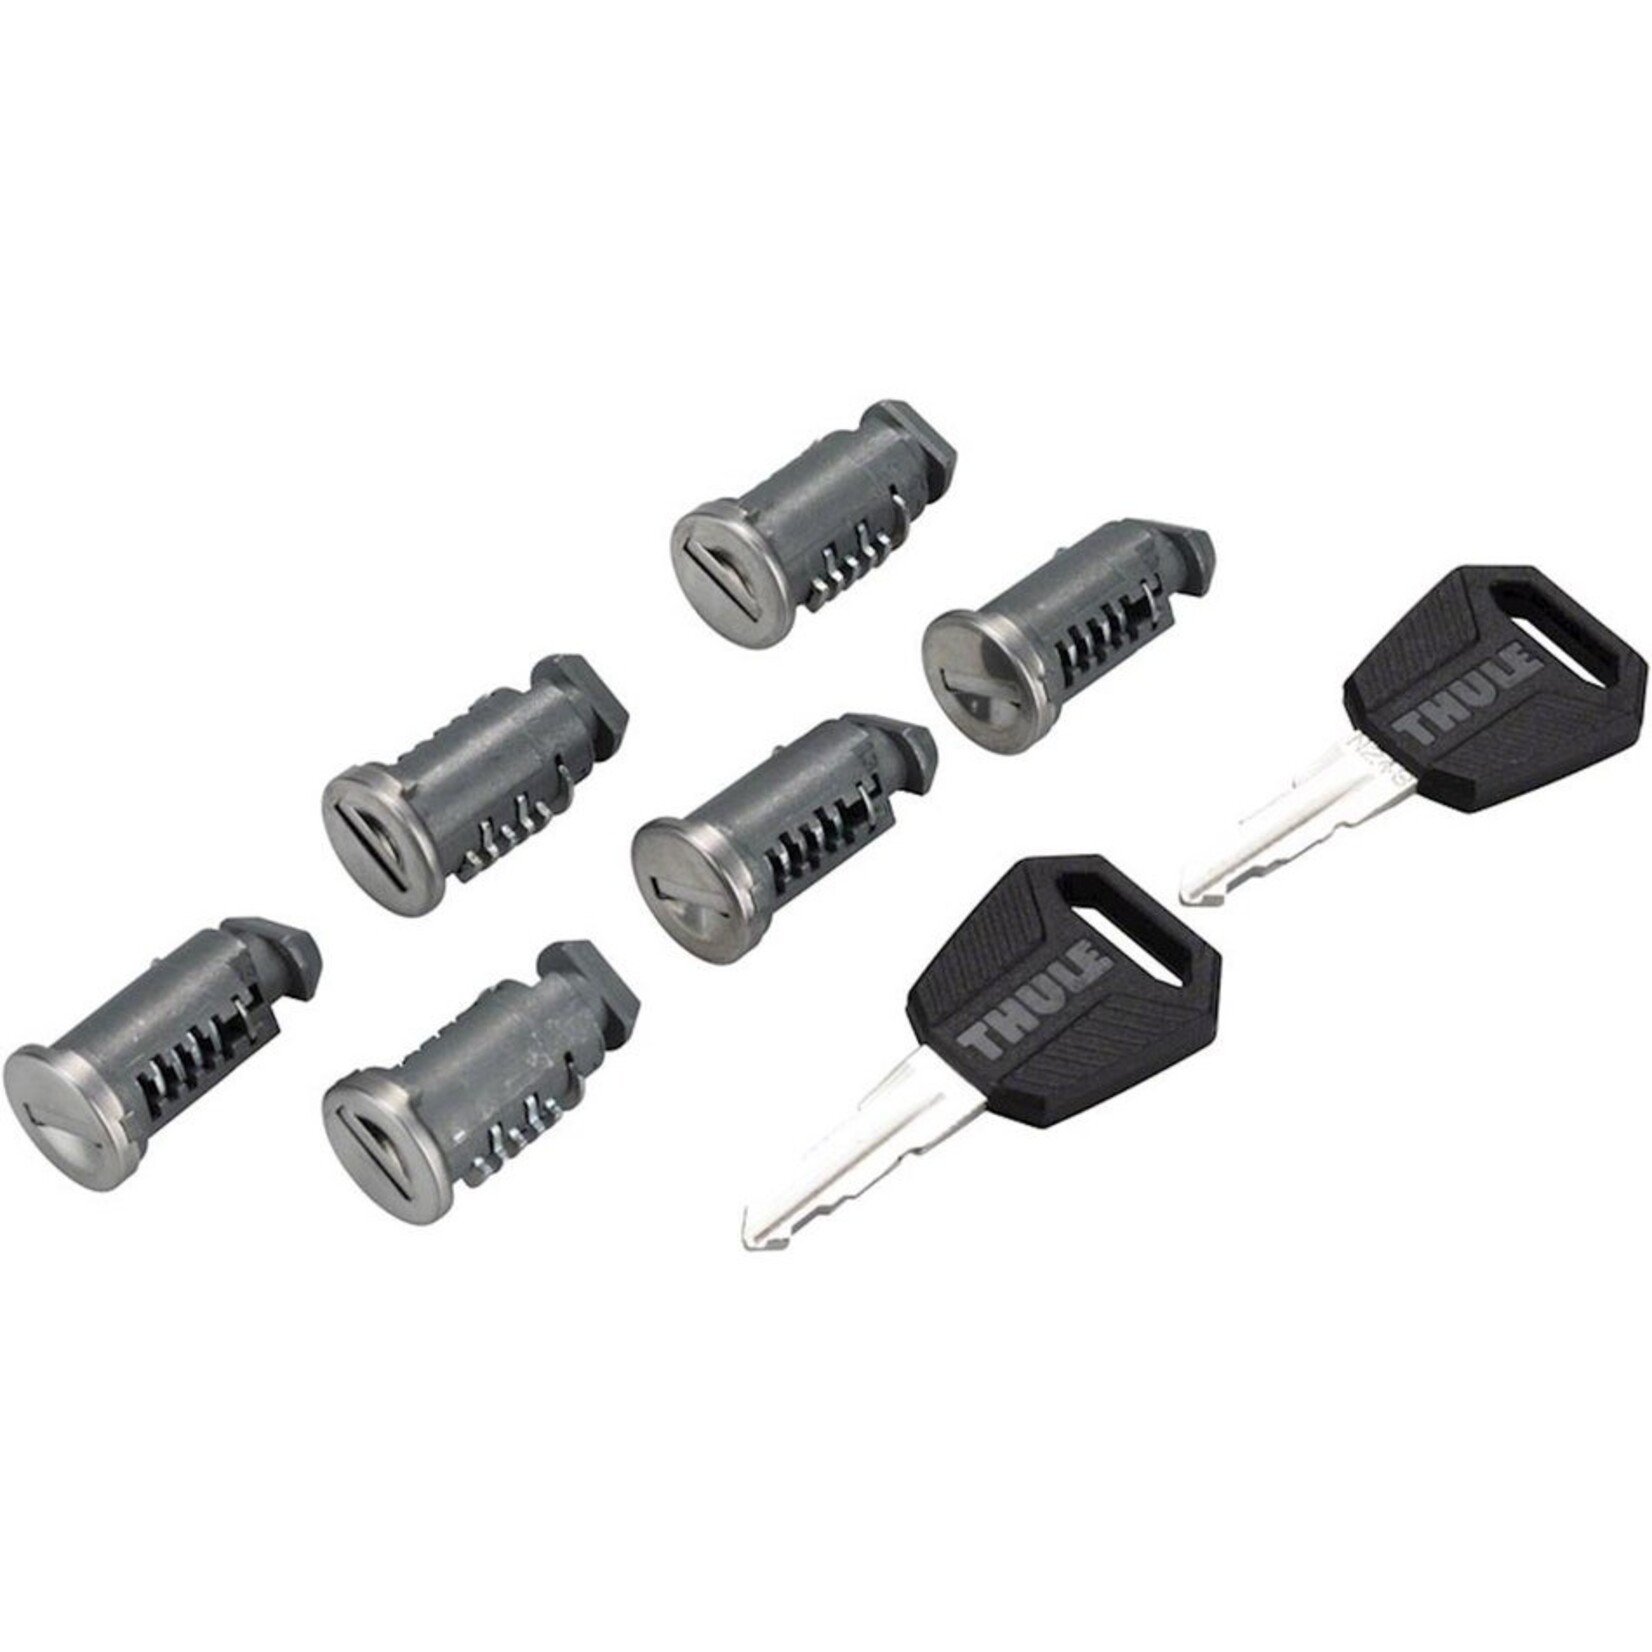 Thule - One-Key Lock Cylinders (6-pack)